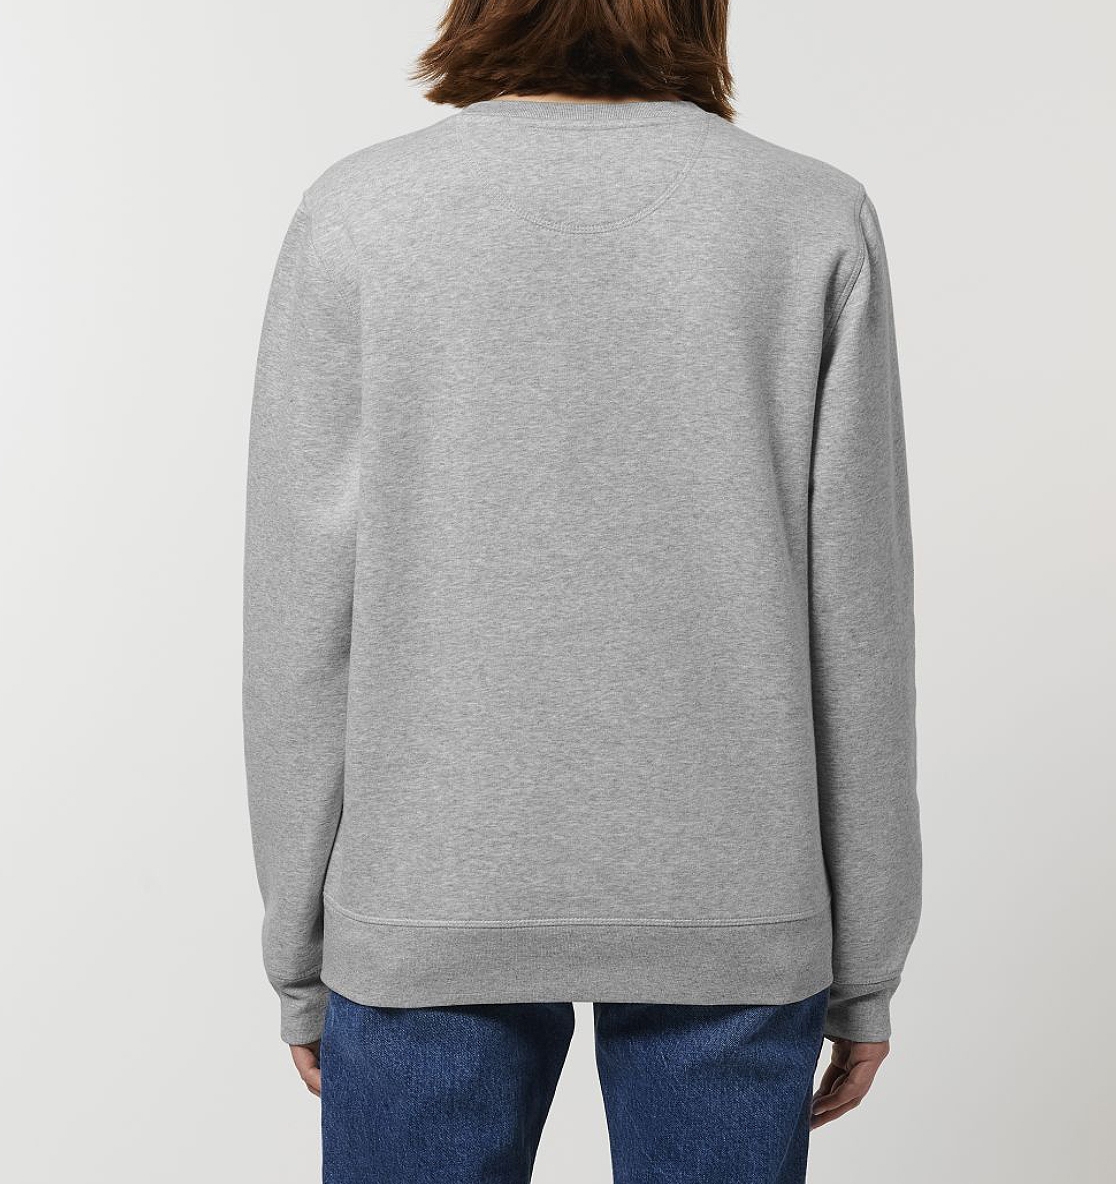 tapeparty, farben & formen vegan gedruckt auf organic Basic Sweatshirt, faibleshop